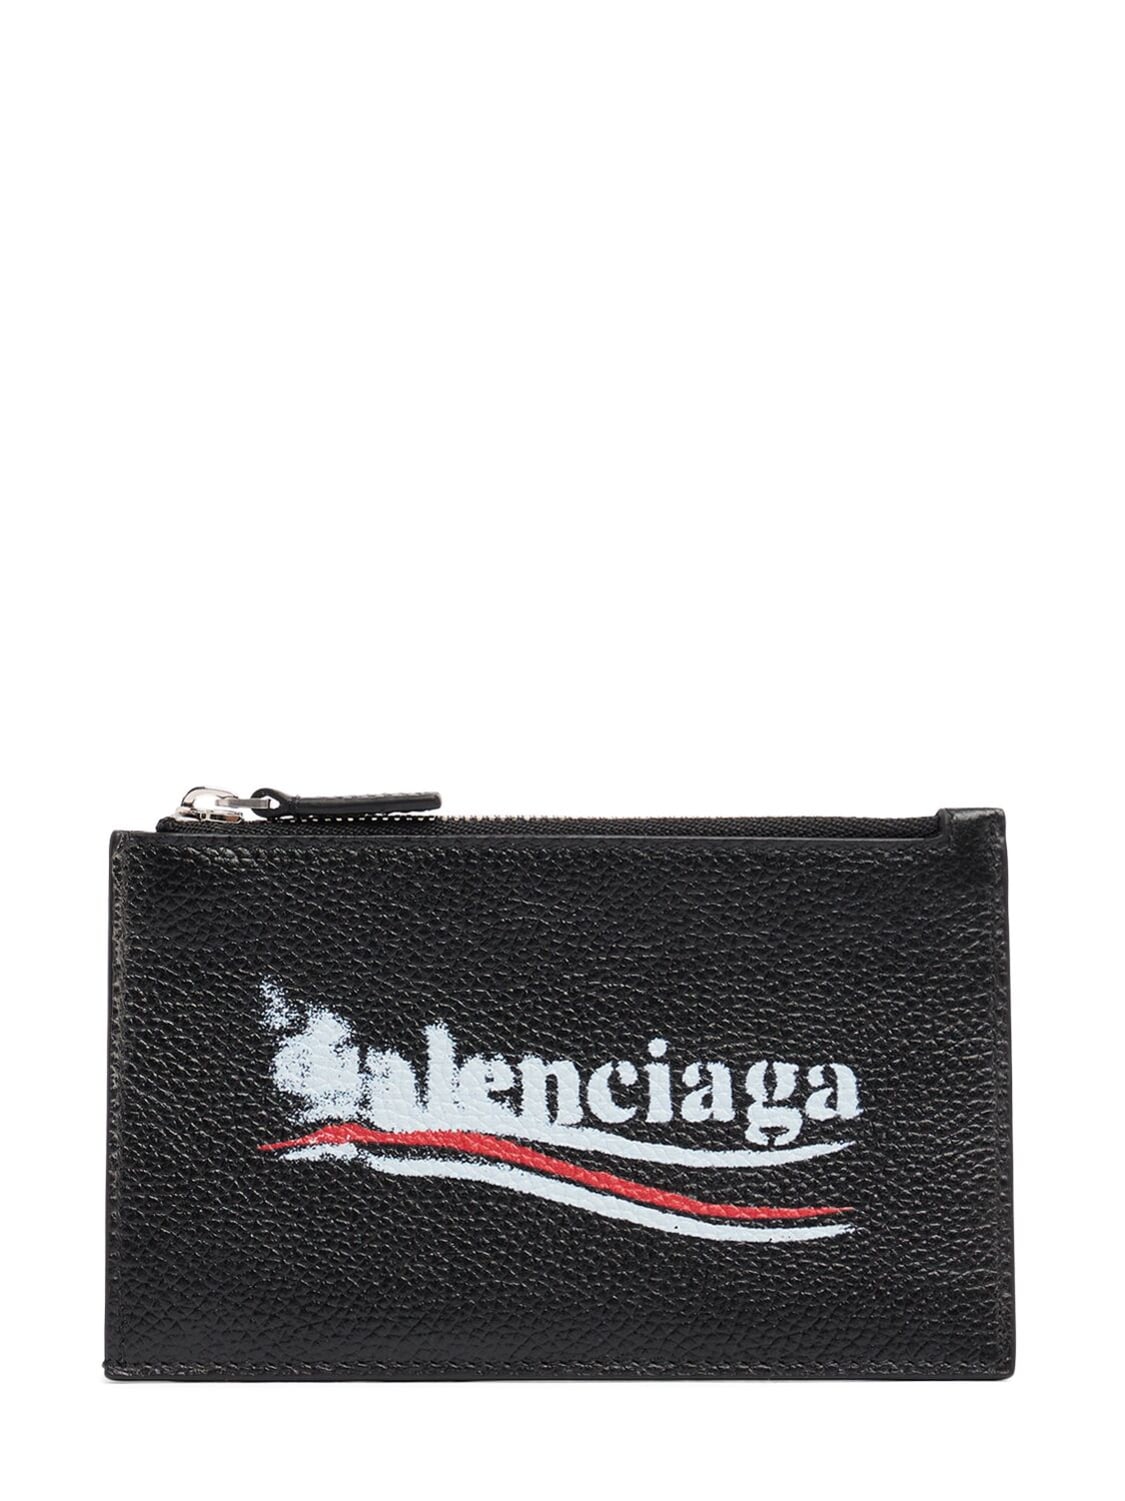 Balenciaga Printed Leather Zip Wallet In Black